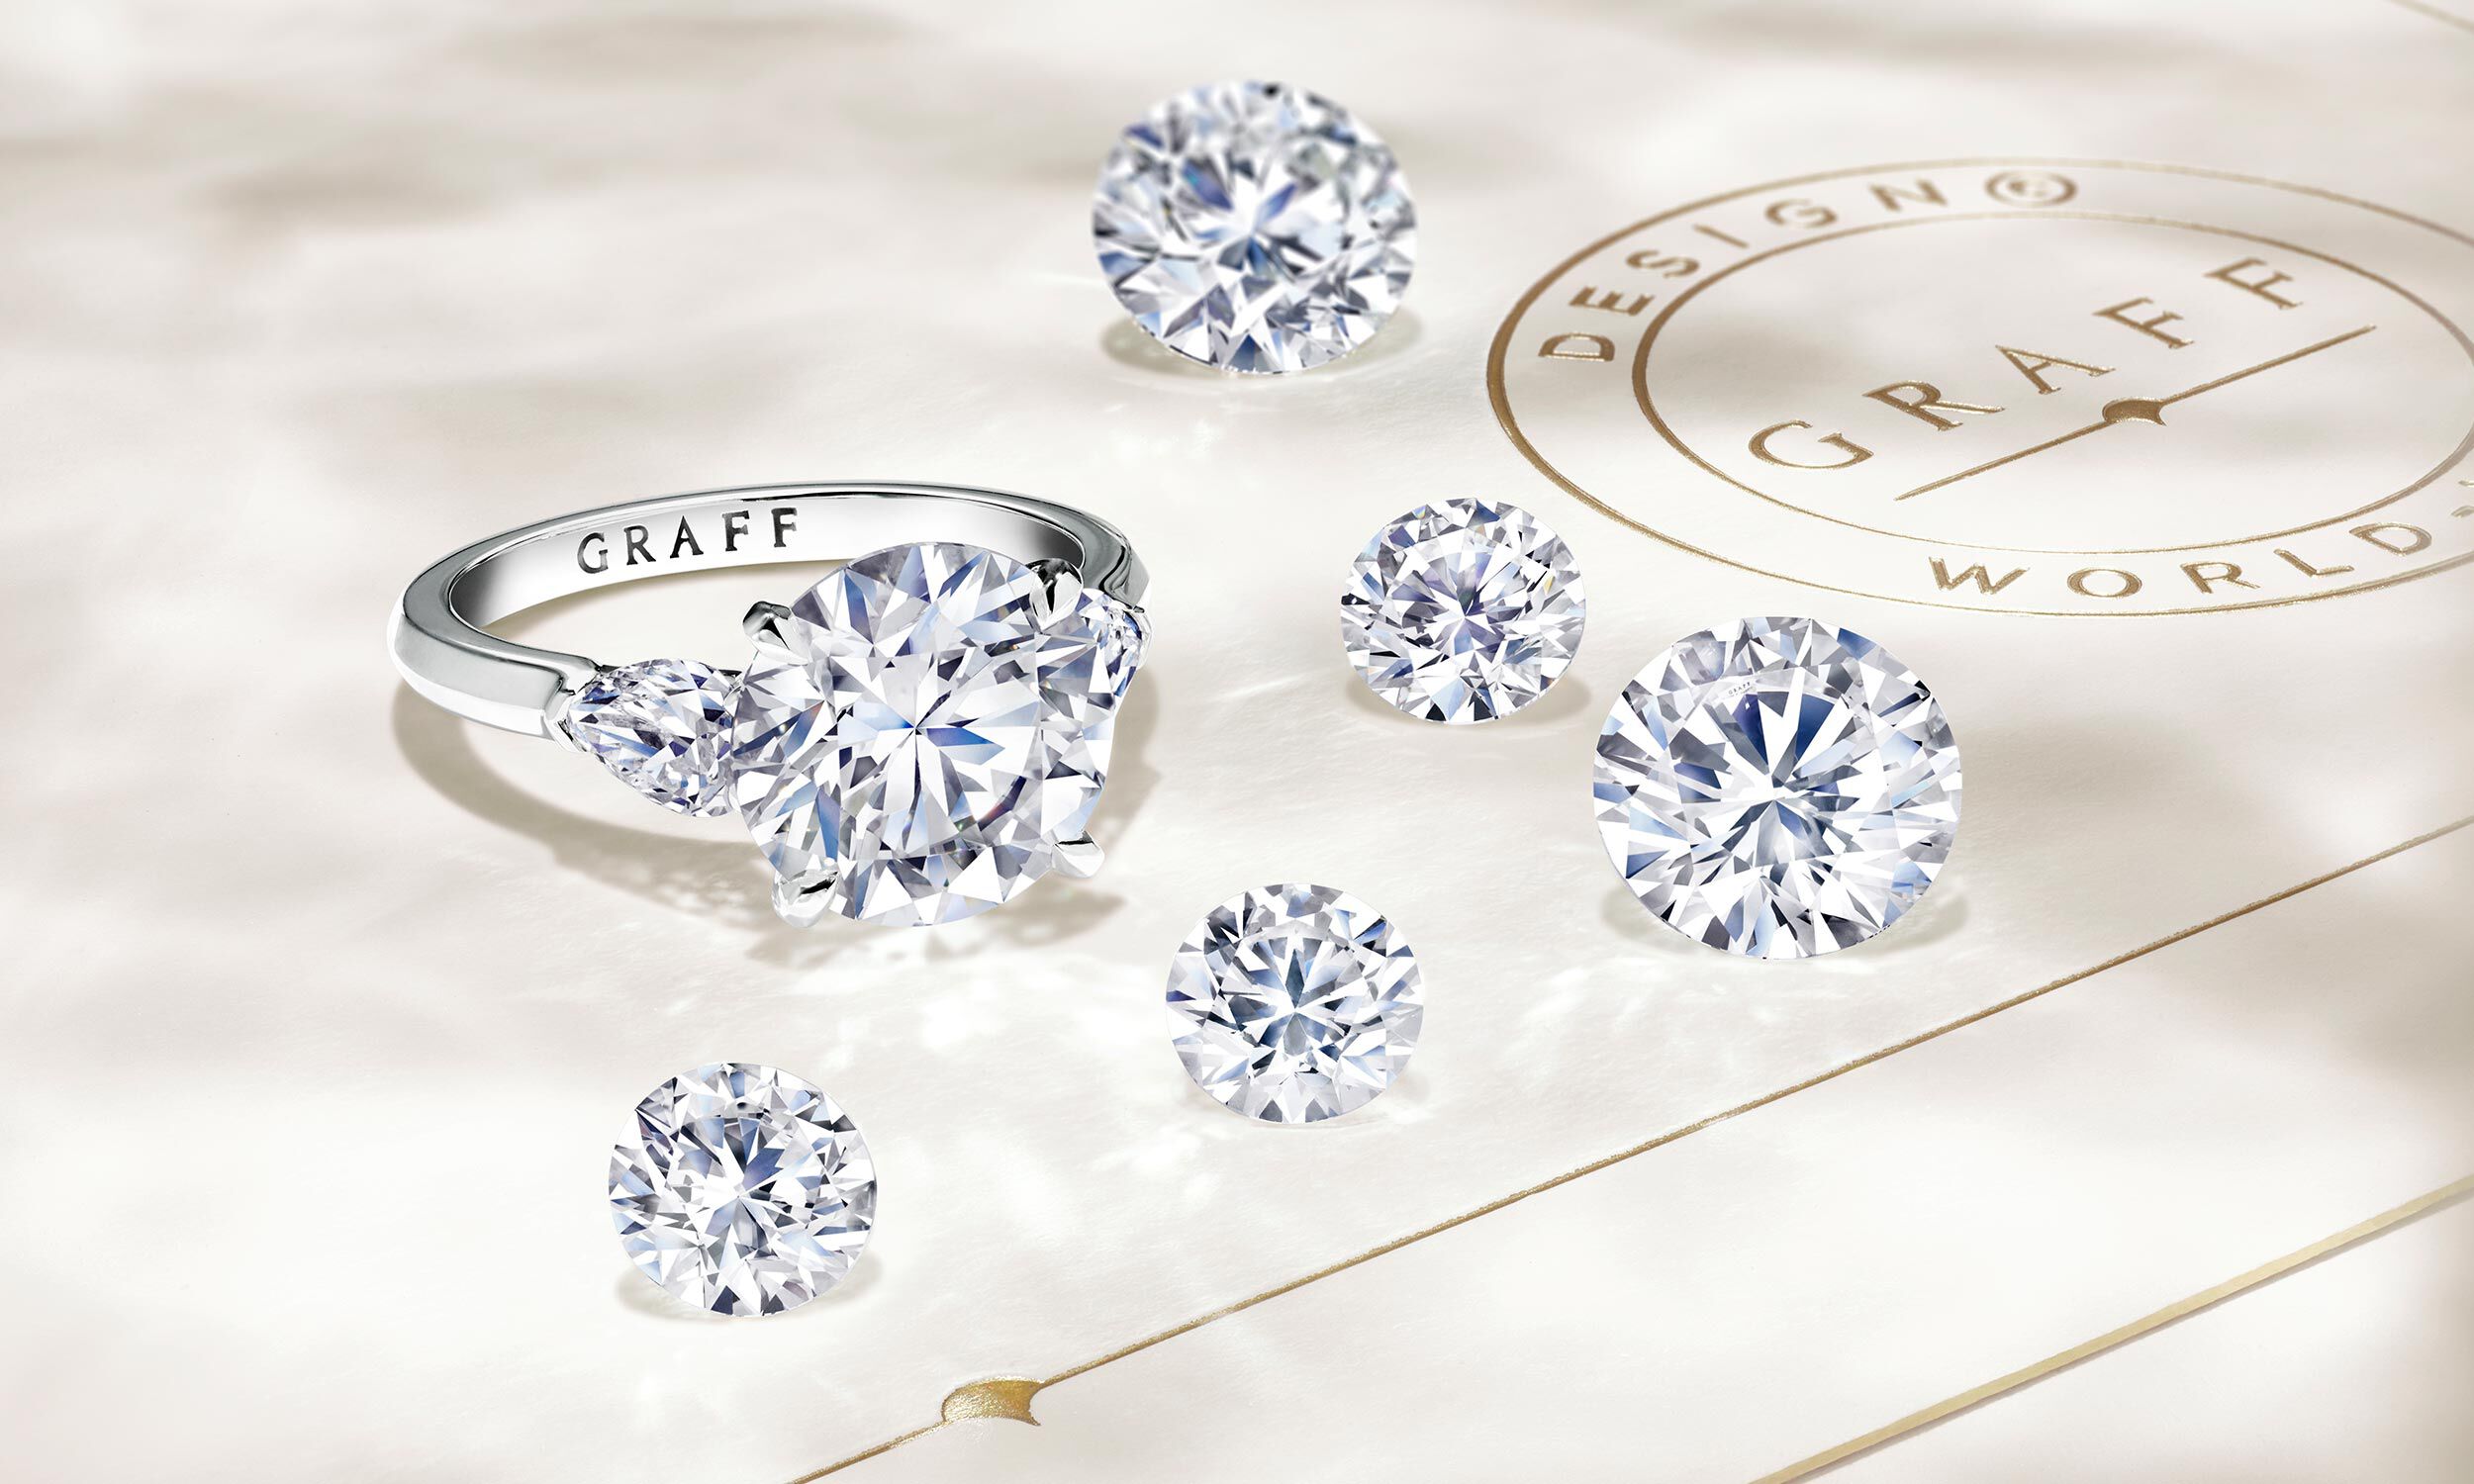 Graff Promise diamond engagement ring with loose diamonds